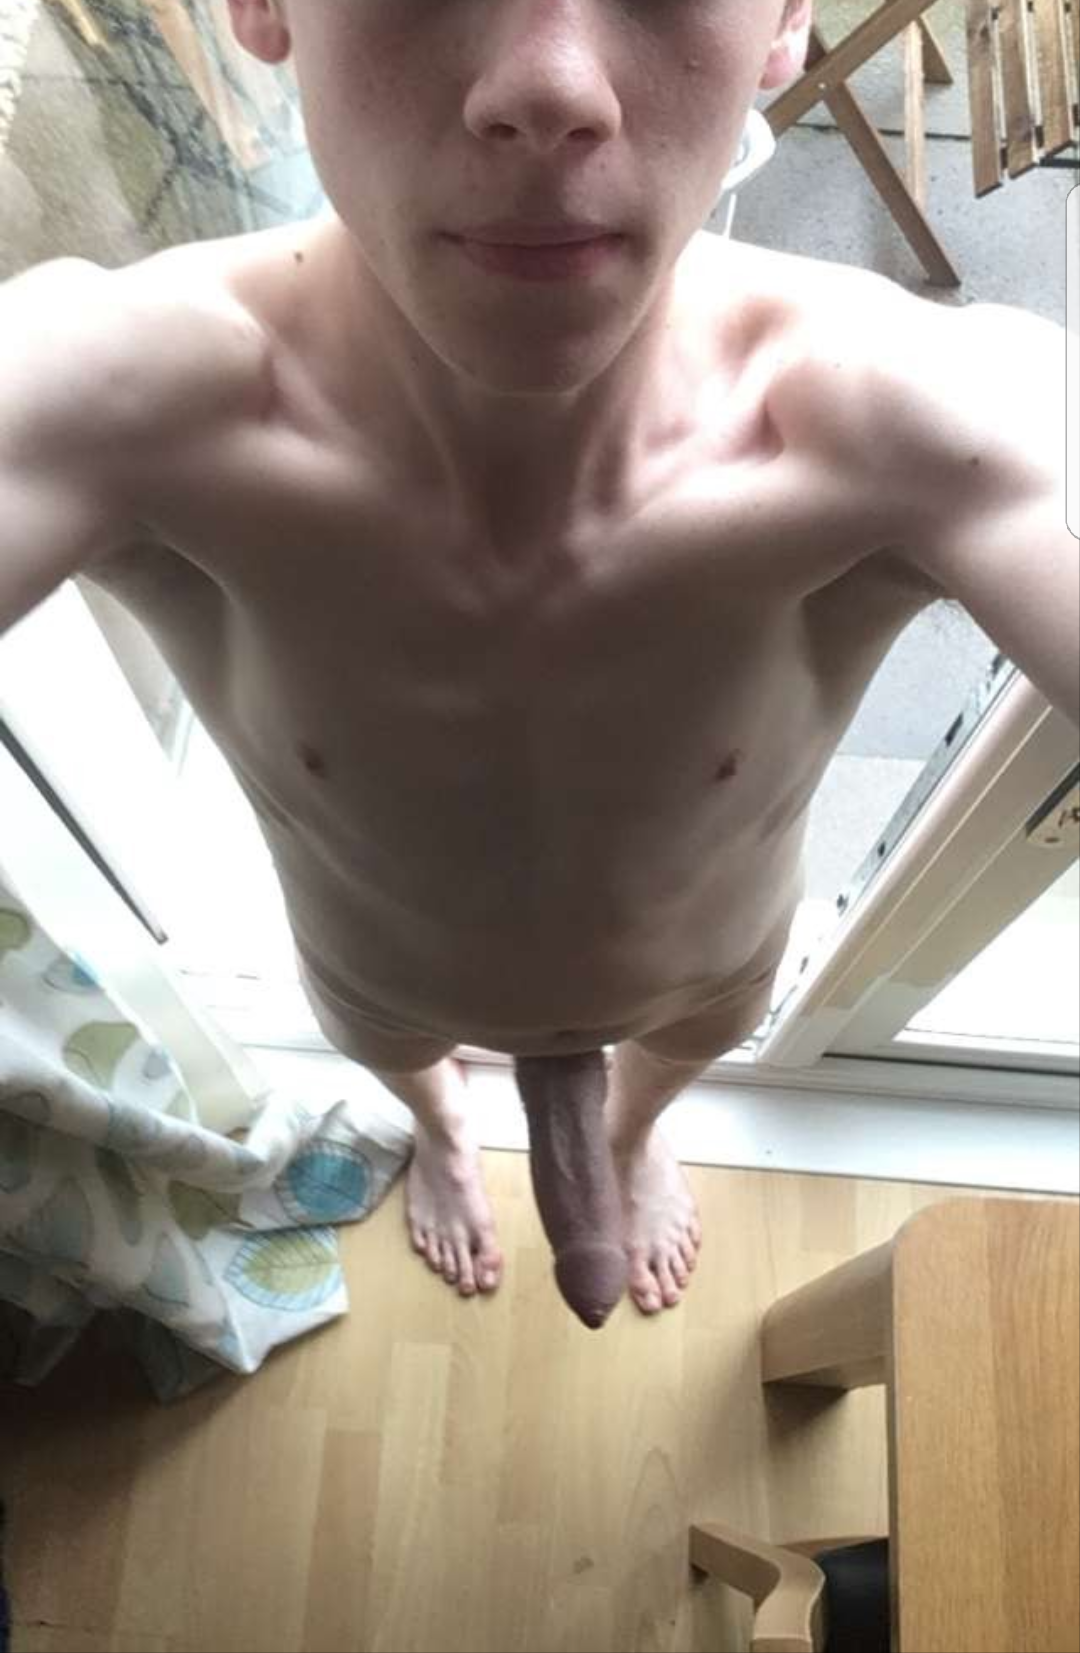 Nude Boy Selfie